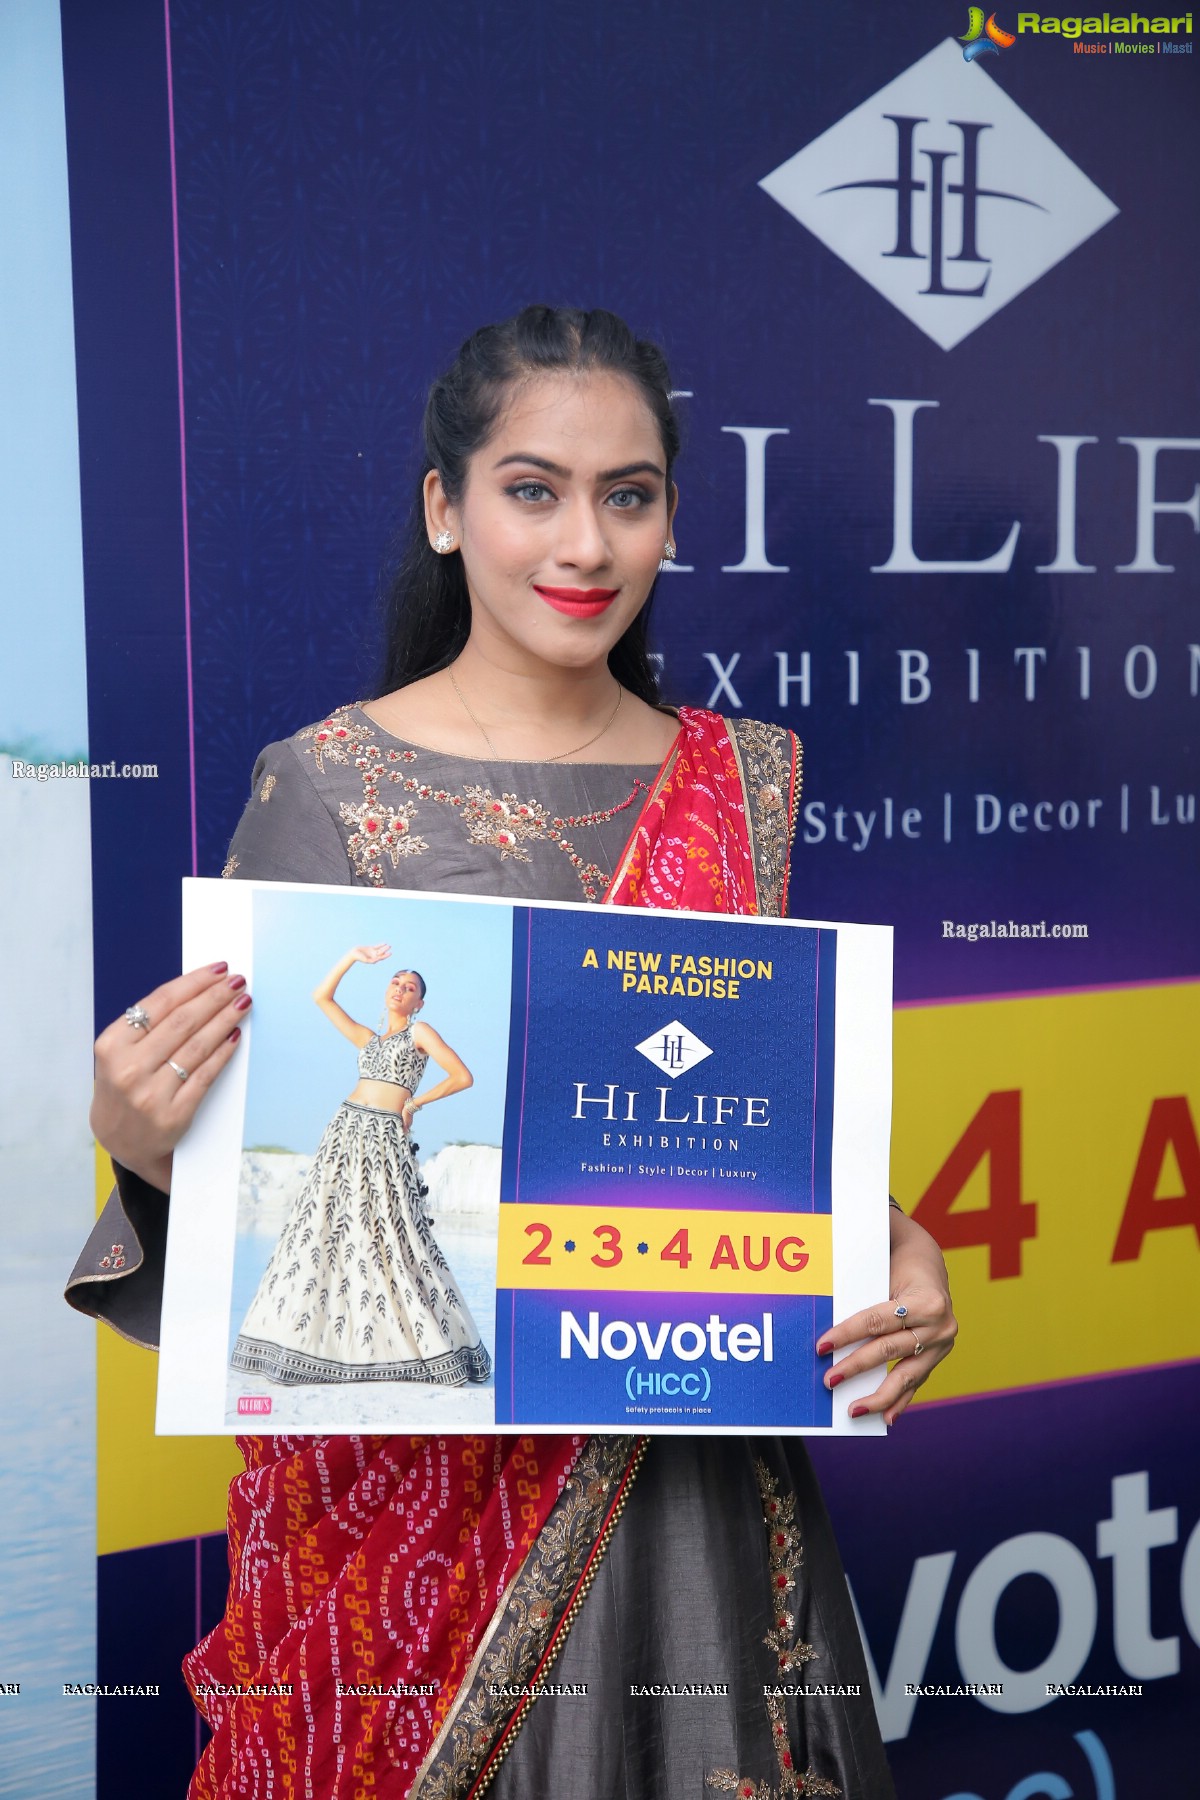 Hi-Life Exhibition August 2021 Curtain Raiser and Fashion Showcase at Marks Media Center